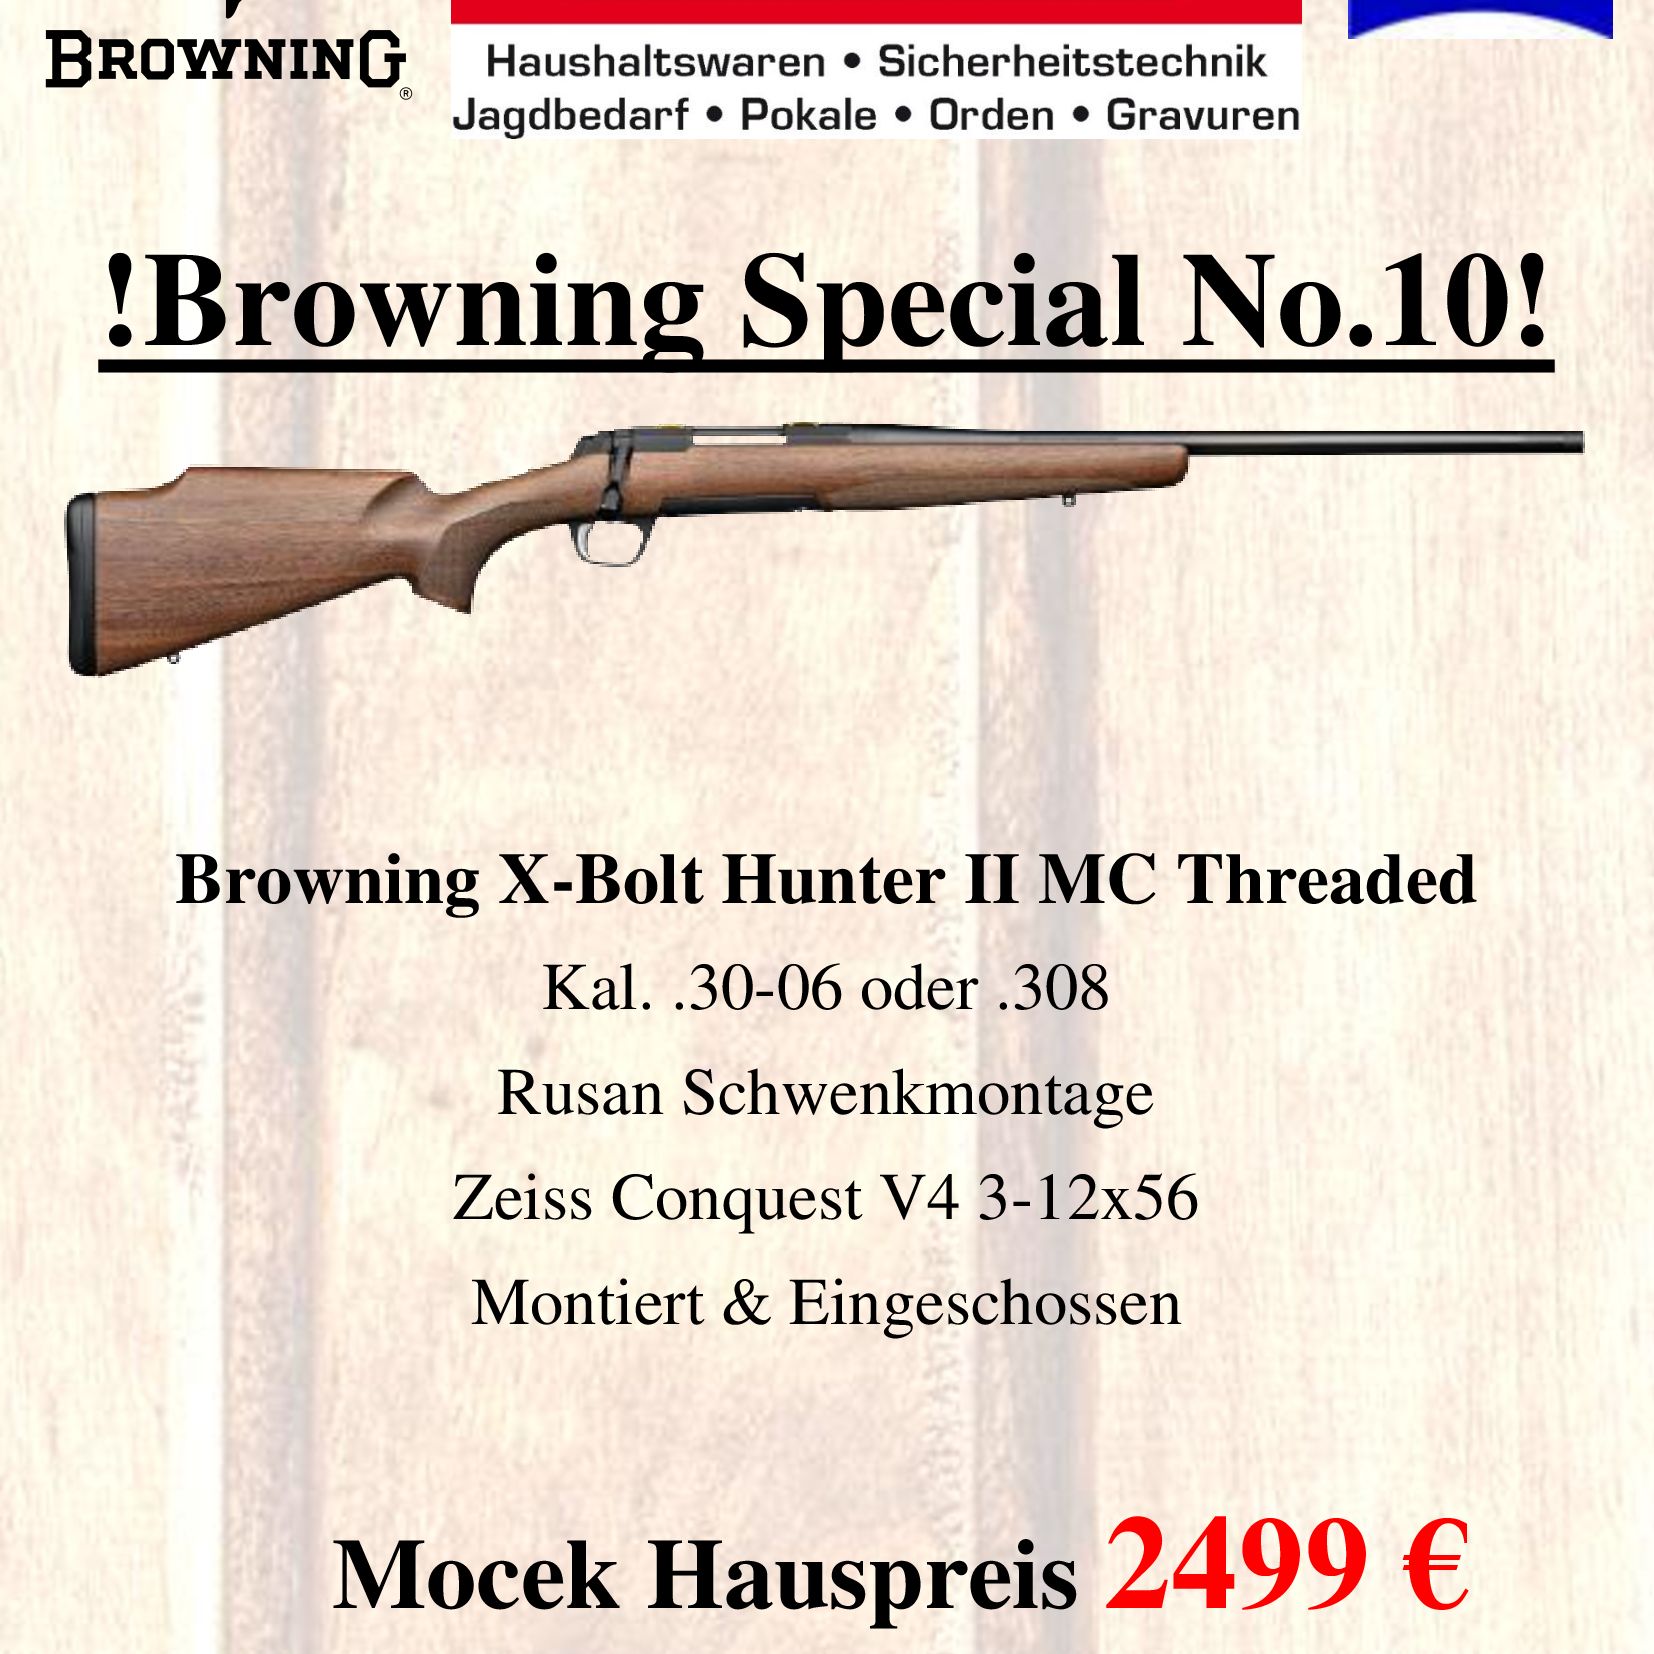 Browning X-Bolt Hunter II  MC Threaded, mit Zeiss Conquest V4 3-12x56